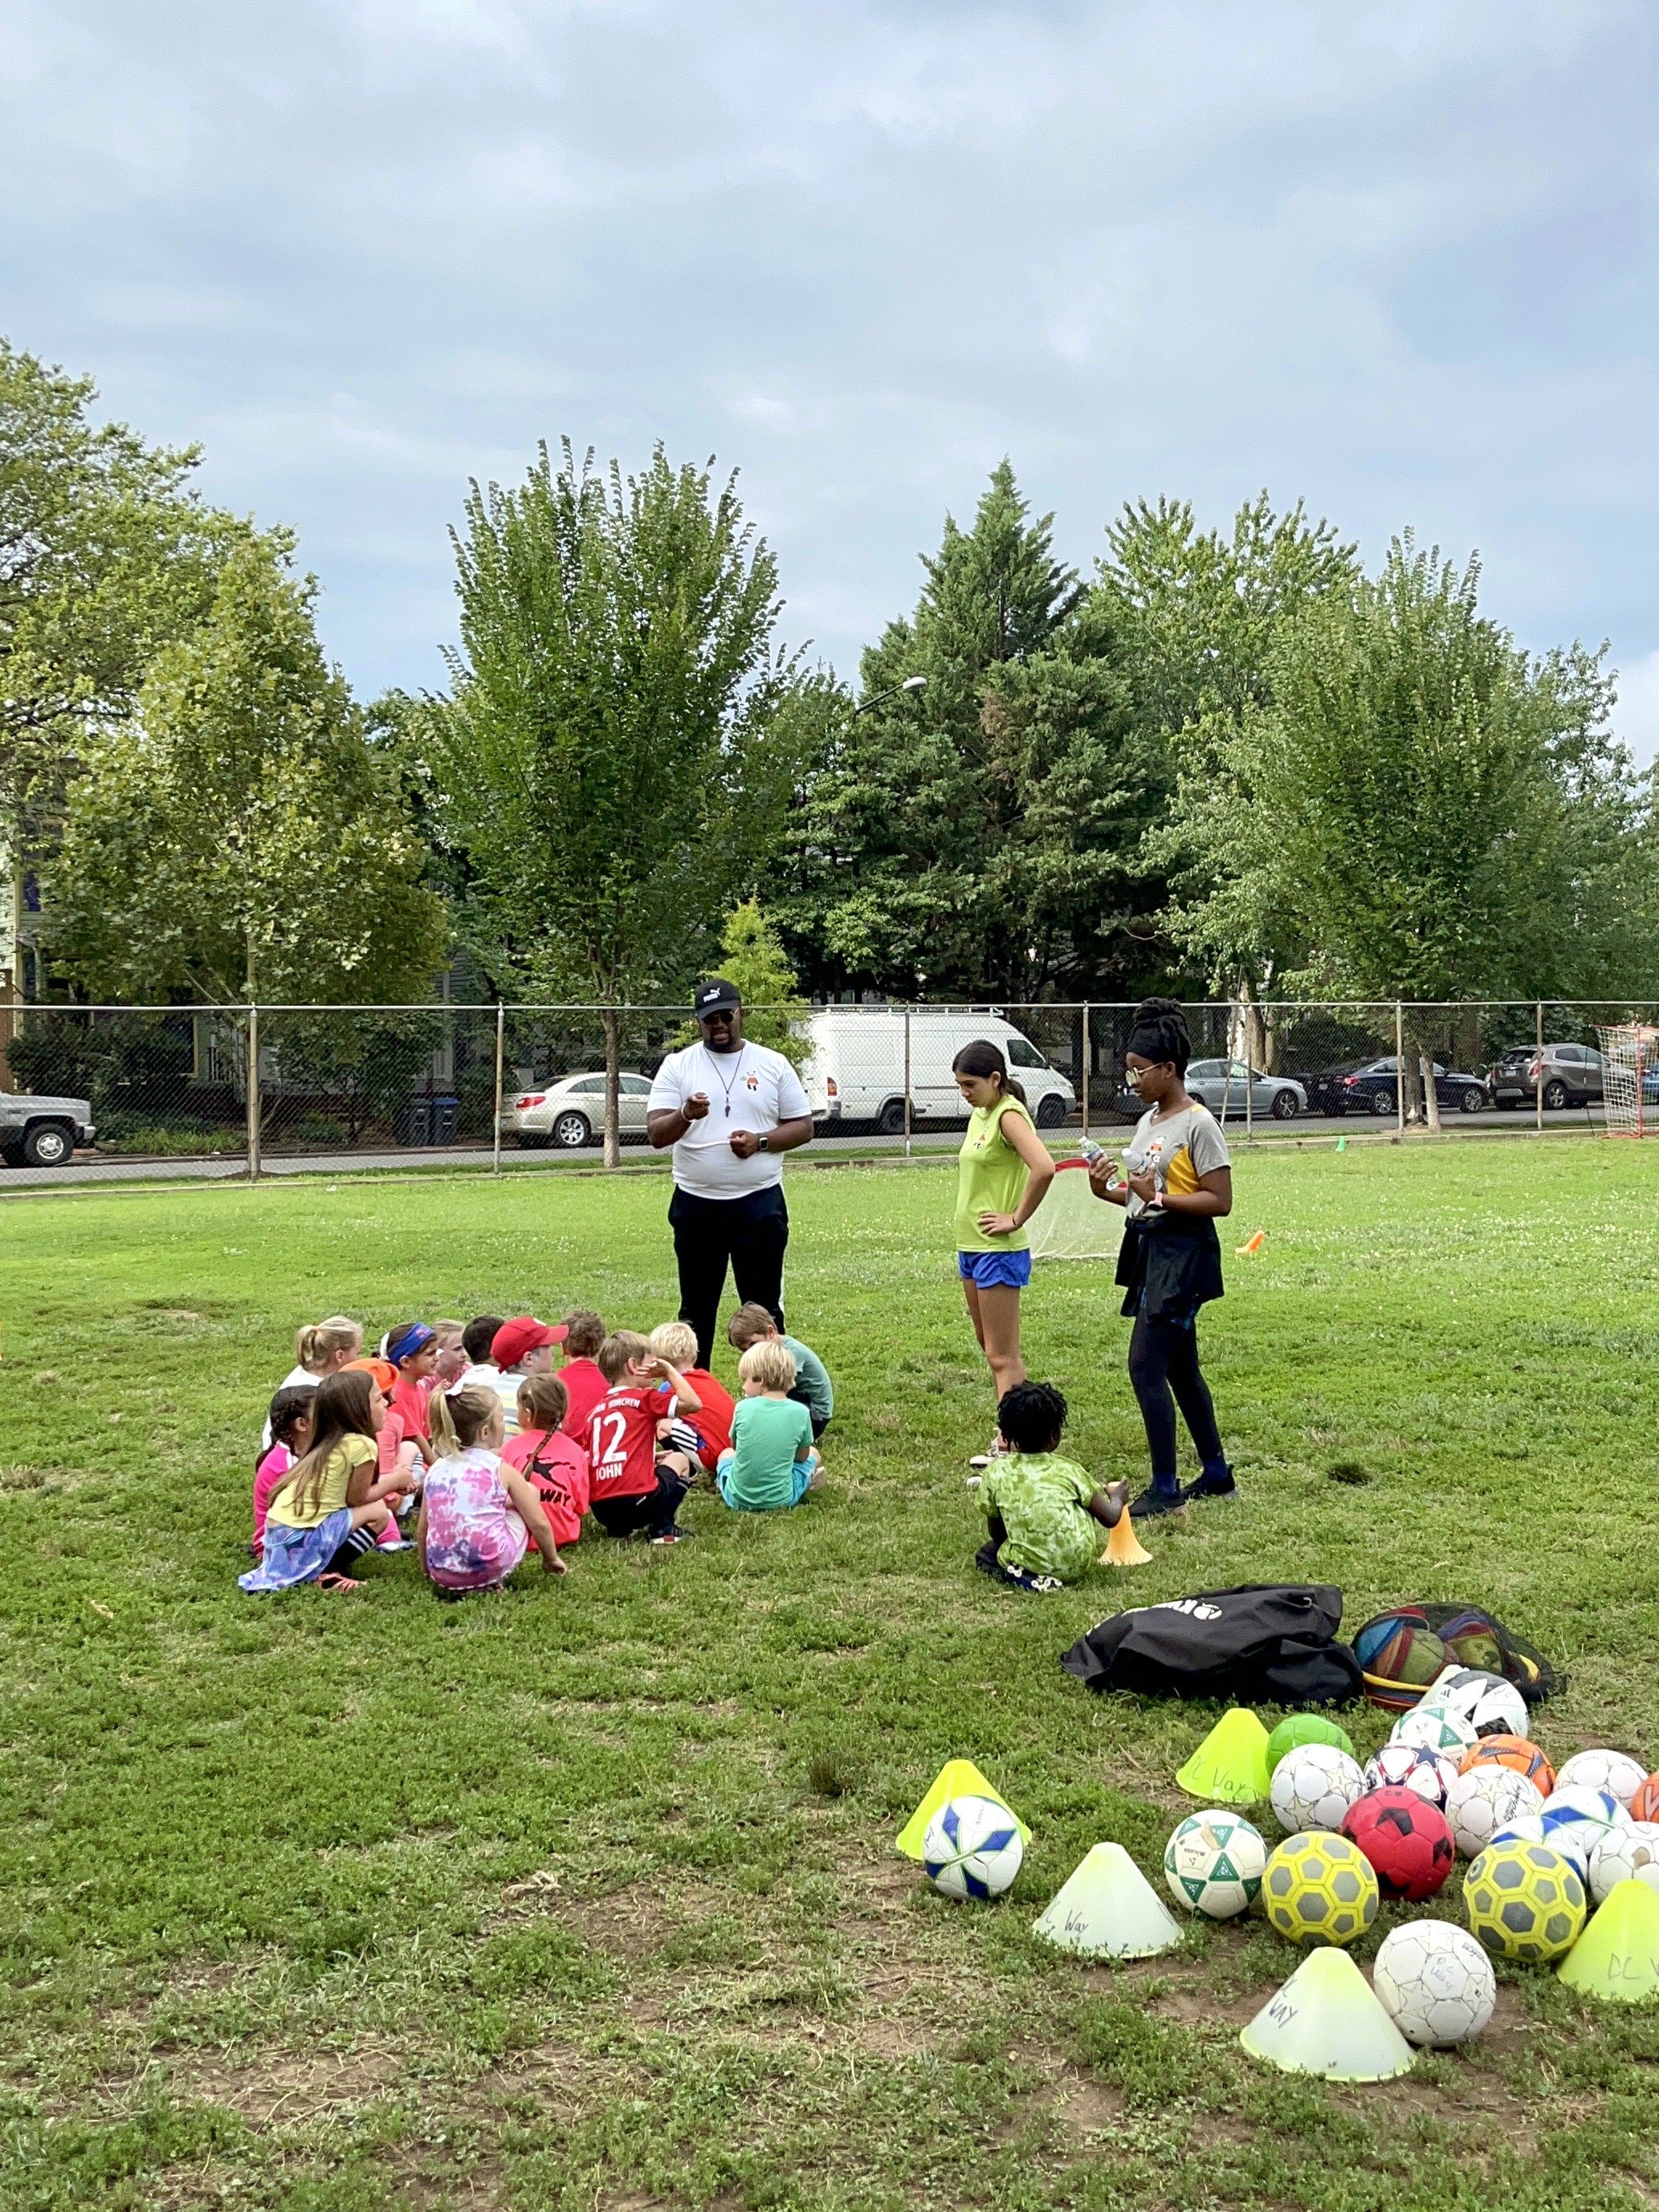 Dc-way-soccer-club-for-kids-in-washington-dc-summer-camp-at-tyler-elementary-school- 8357.JPG